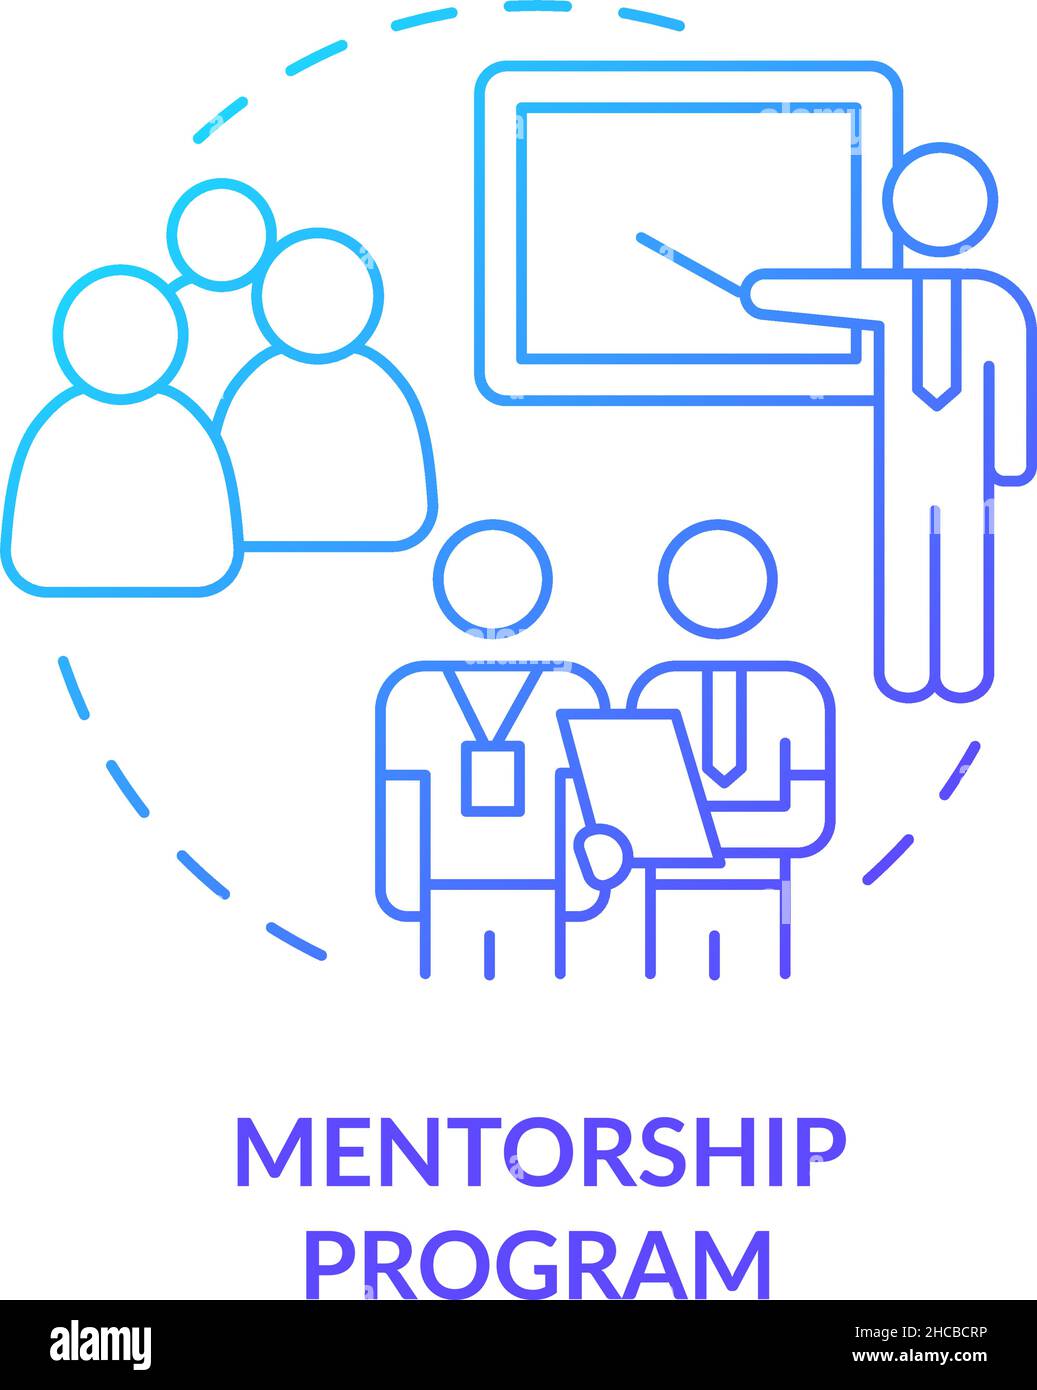 Mentorship program blue gradient concept icon Stock Vector